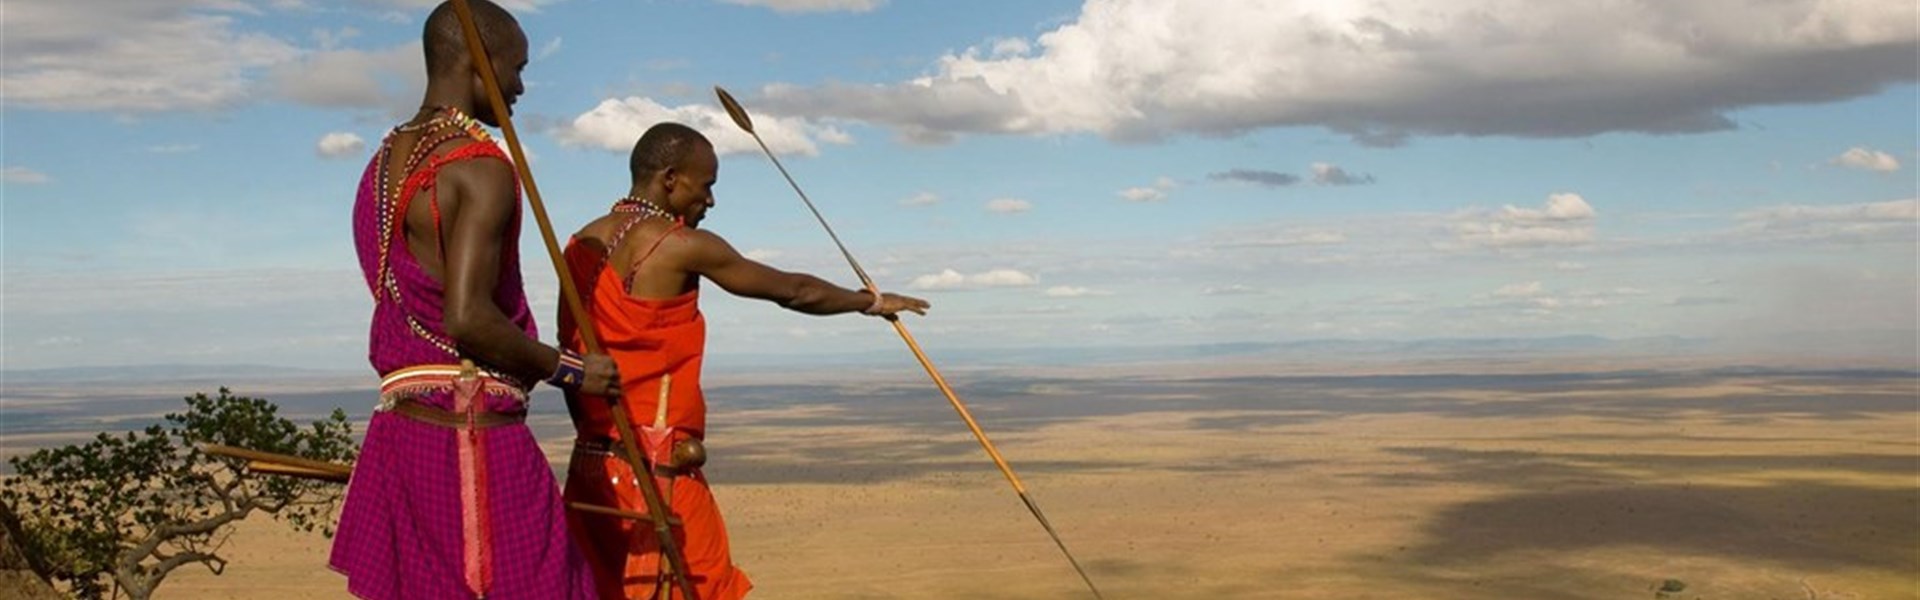 Marco Polo - Mara Engai Wilderness Lodge 5* - Kena_Safari_Masai Mara_Mara Engei